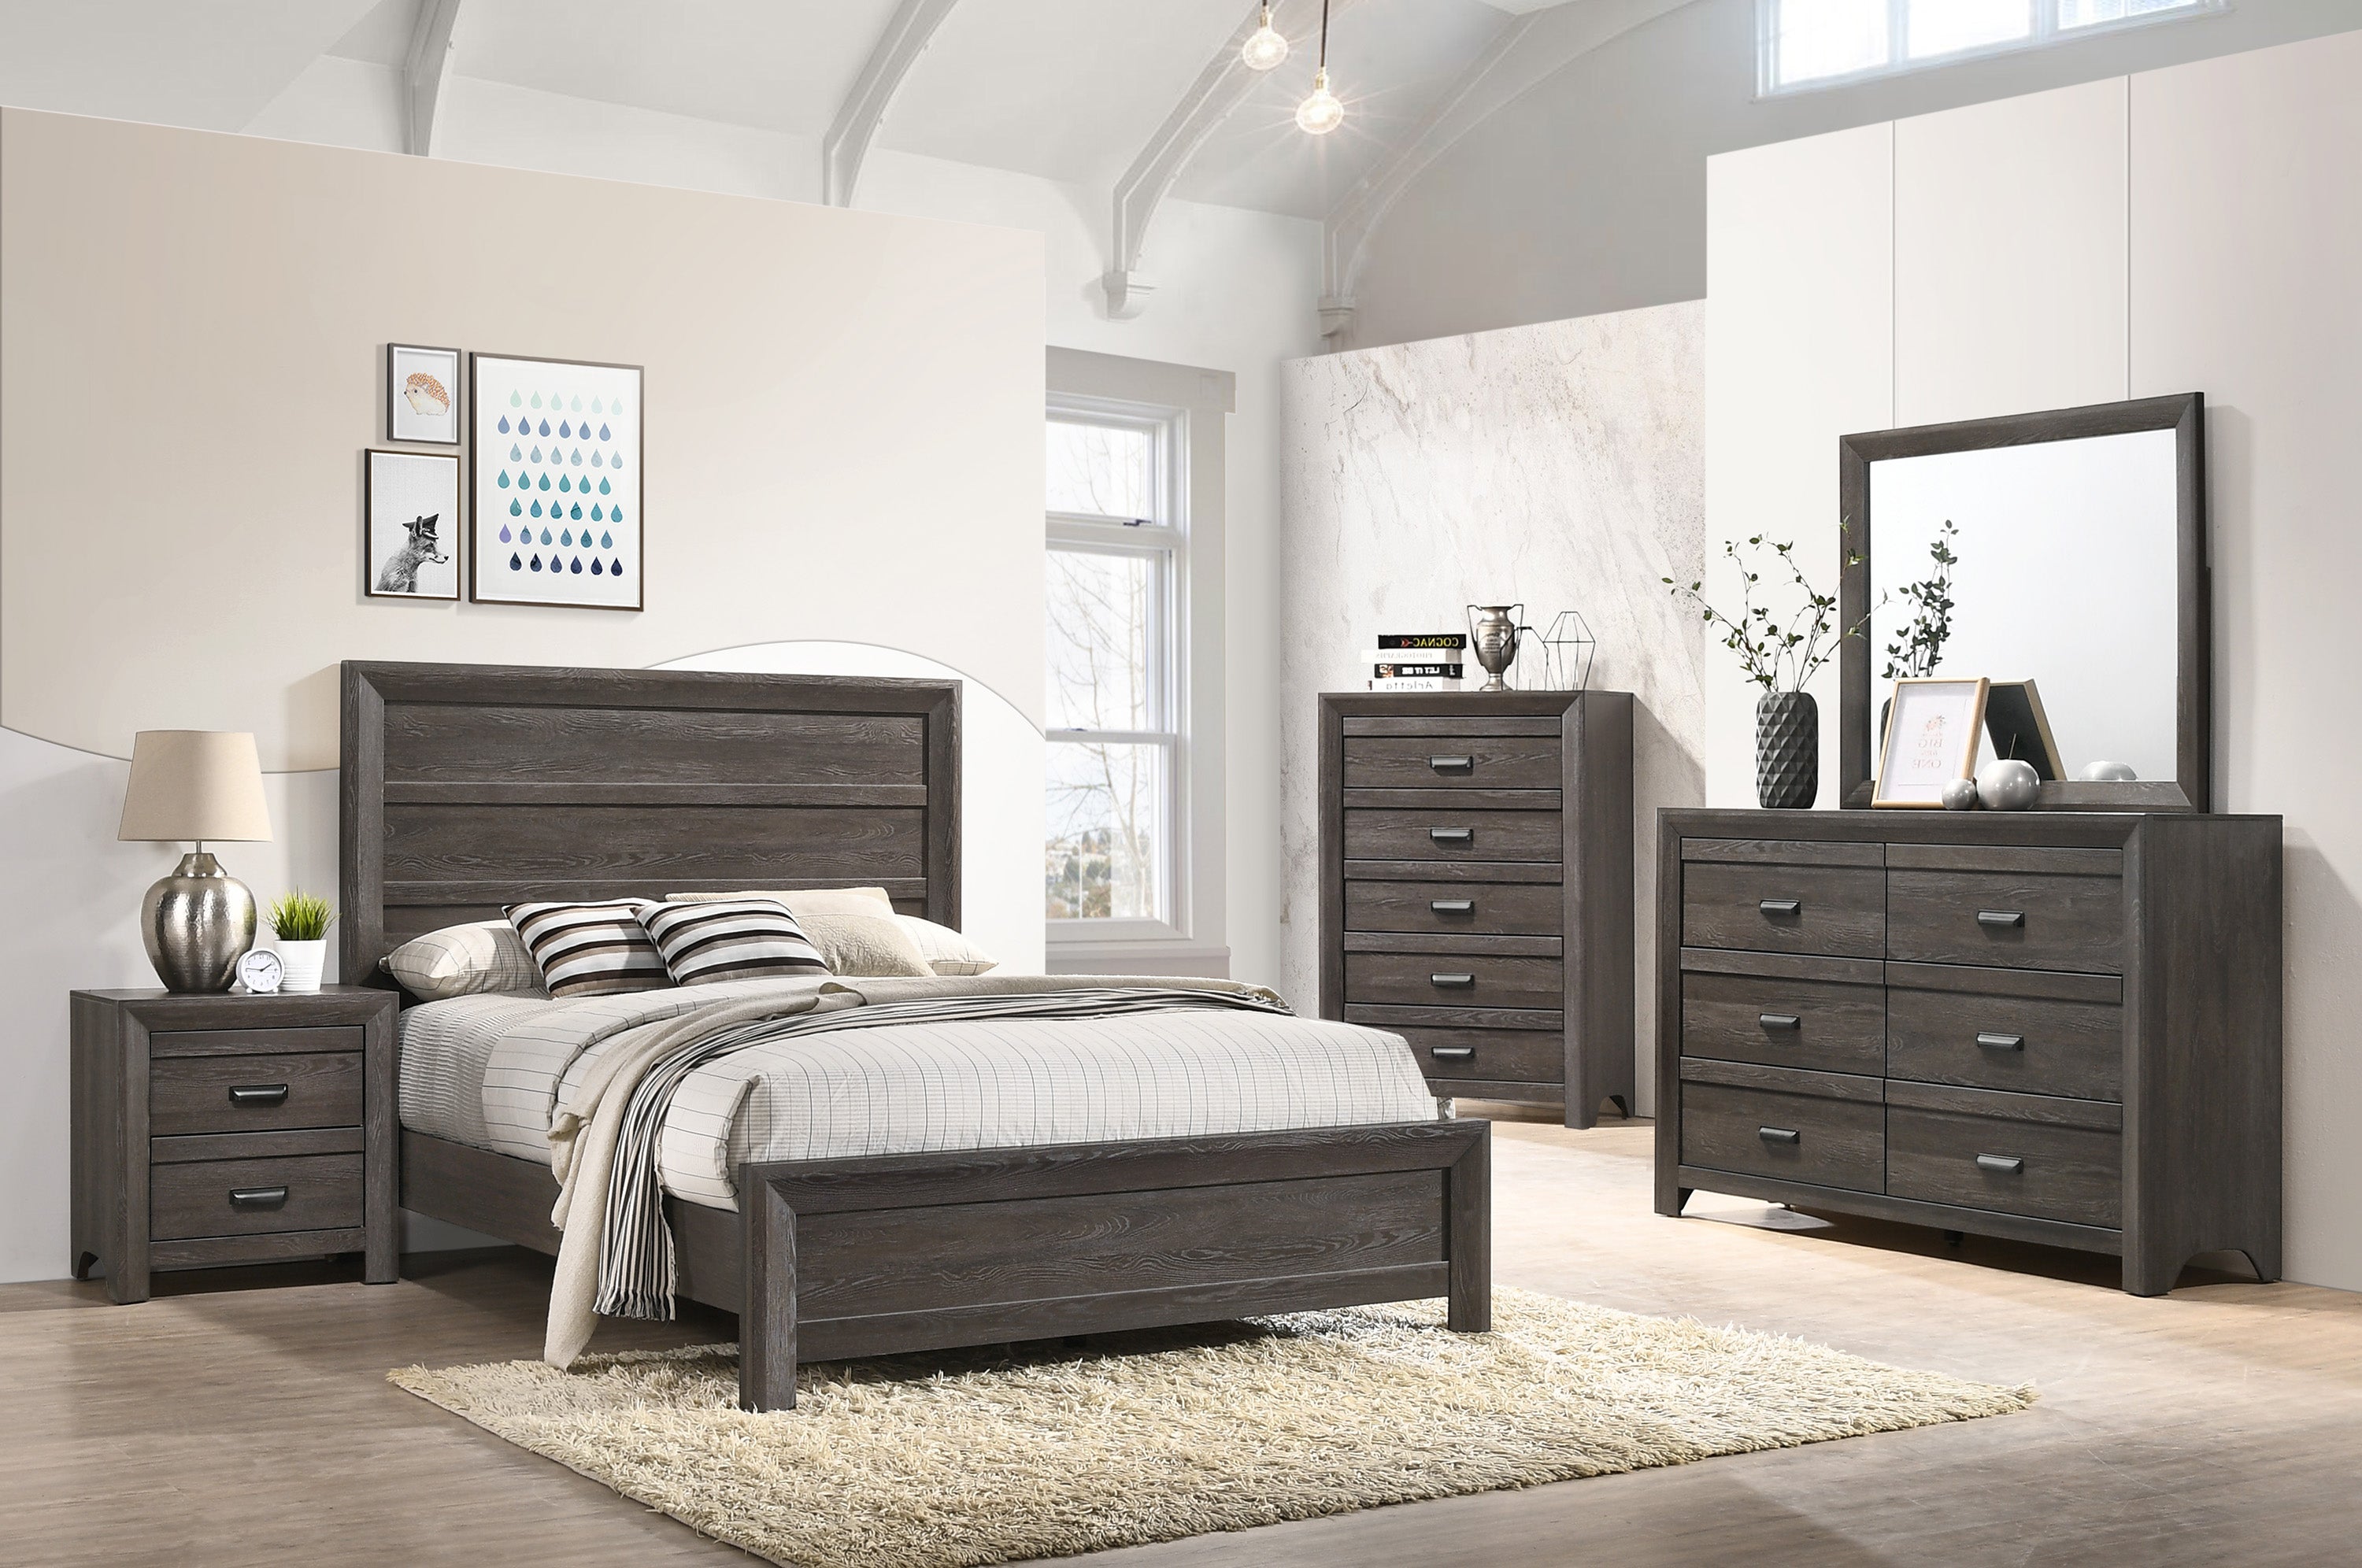 heart foundation bedroom furniture